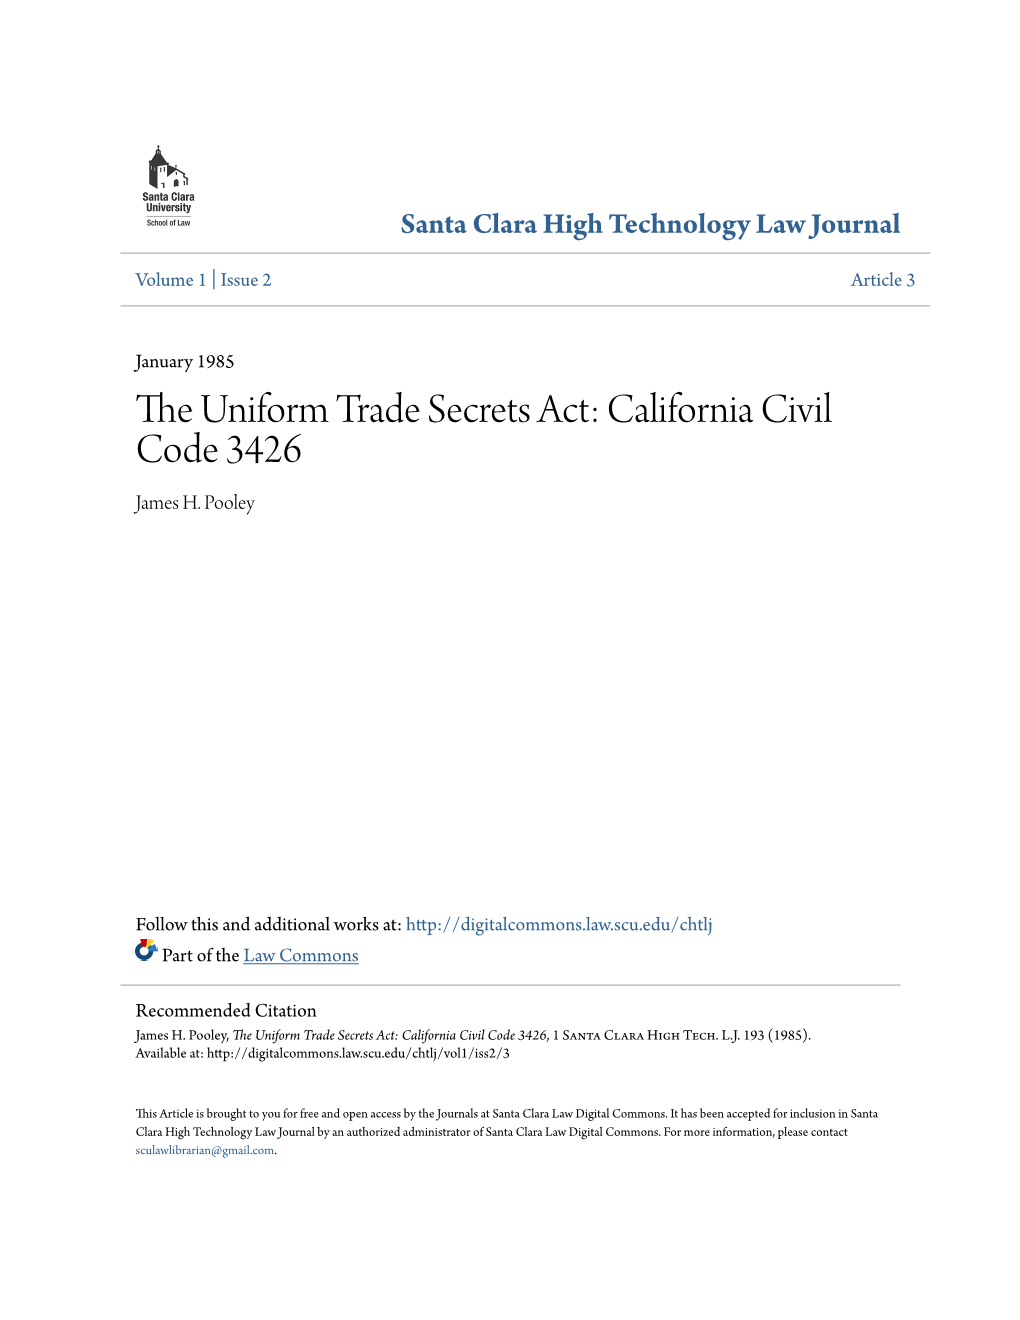 The Uniform Trade Secrets Act: California Civil Code 3426, 1 Santa Clara High Tech